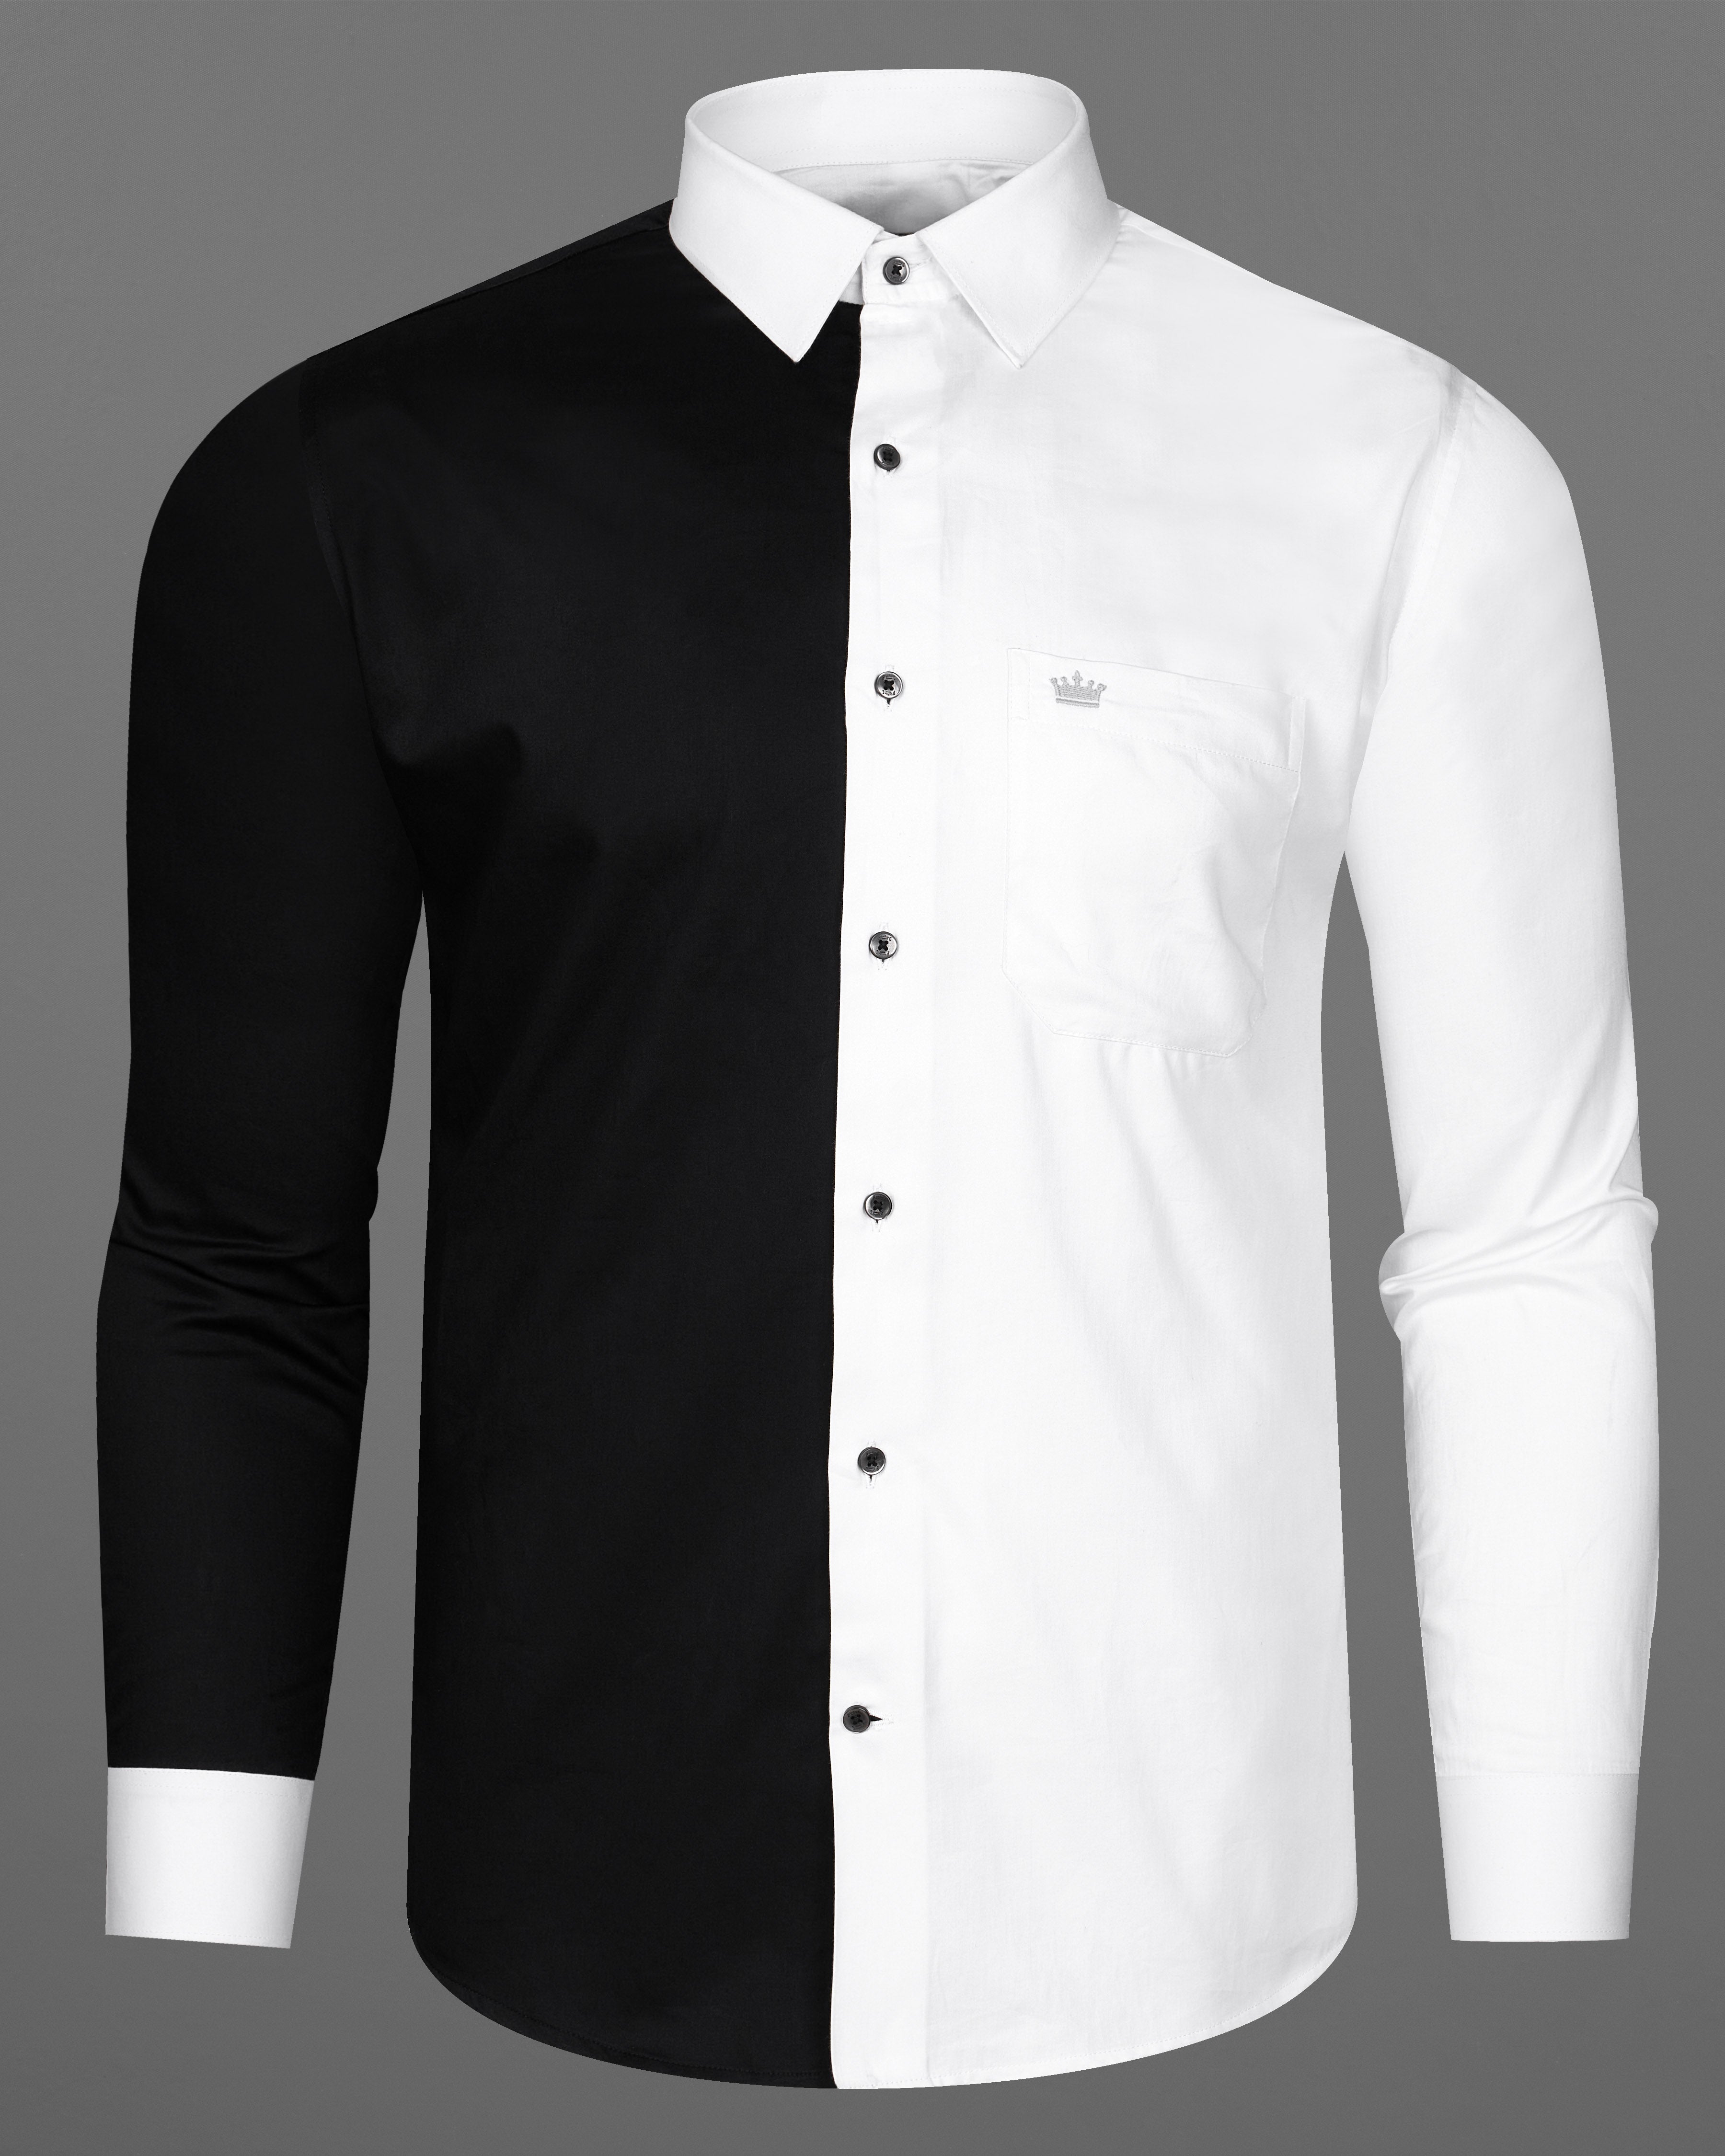 Half white and Half Black Subtle Sheen Premium Cotton Shirt 4265-BLK-P28-38, 4265-BLK-P28-H-38, 4265-BLK-P28-39, 4265-BLK-P28-H-39, 4265-BLK-P28-40, 4265-BLK-P28-H-40, 4265-BLK-P28-42, 4265-BLK-P28-H-42, 4265-BLK-P28-44, 4265-BLK-P28-H-44, 4265-BLK-P28-46, 4265-BLK-P28-H-46, 4265-BLK-P28-48, 4265-BLK-P28-H-48, 4265-BLK-P28-50, 4265-BLK-P28-H-50, 4265-BLK-P28-52, 4265-BLK-P28-H-52